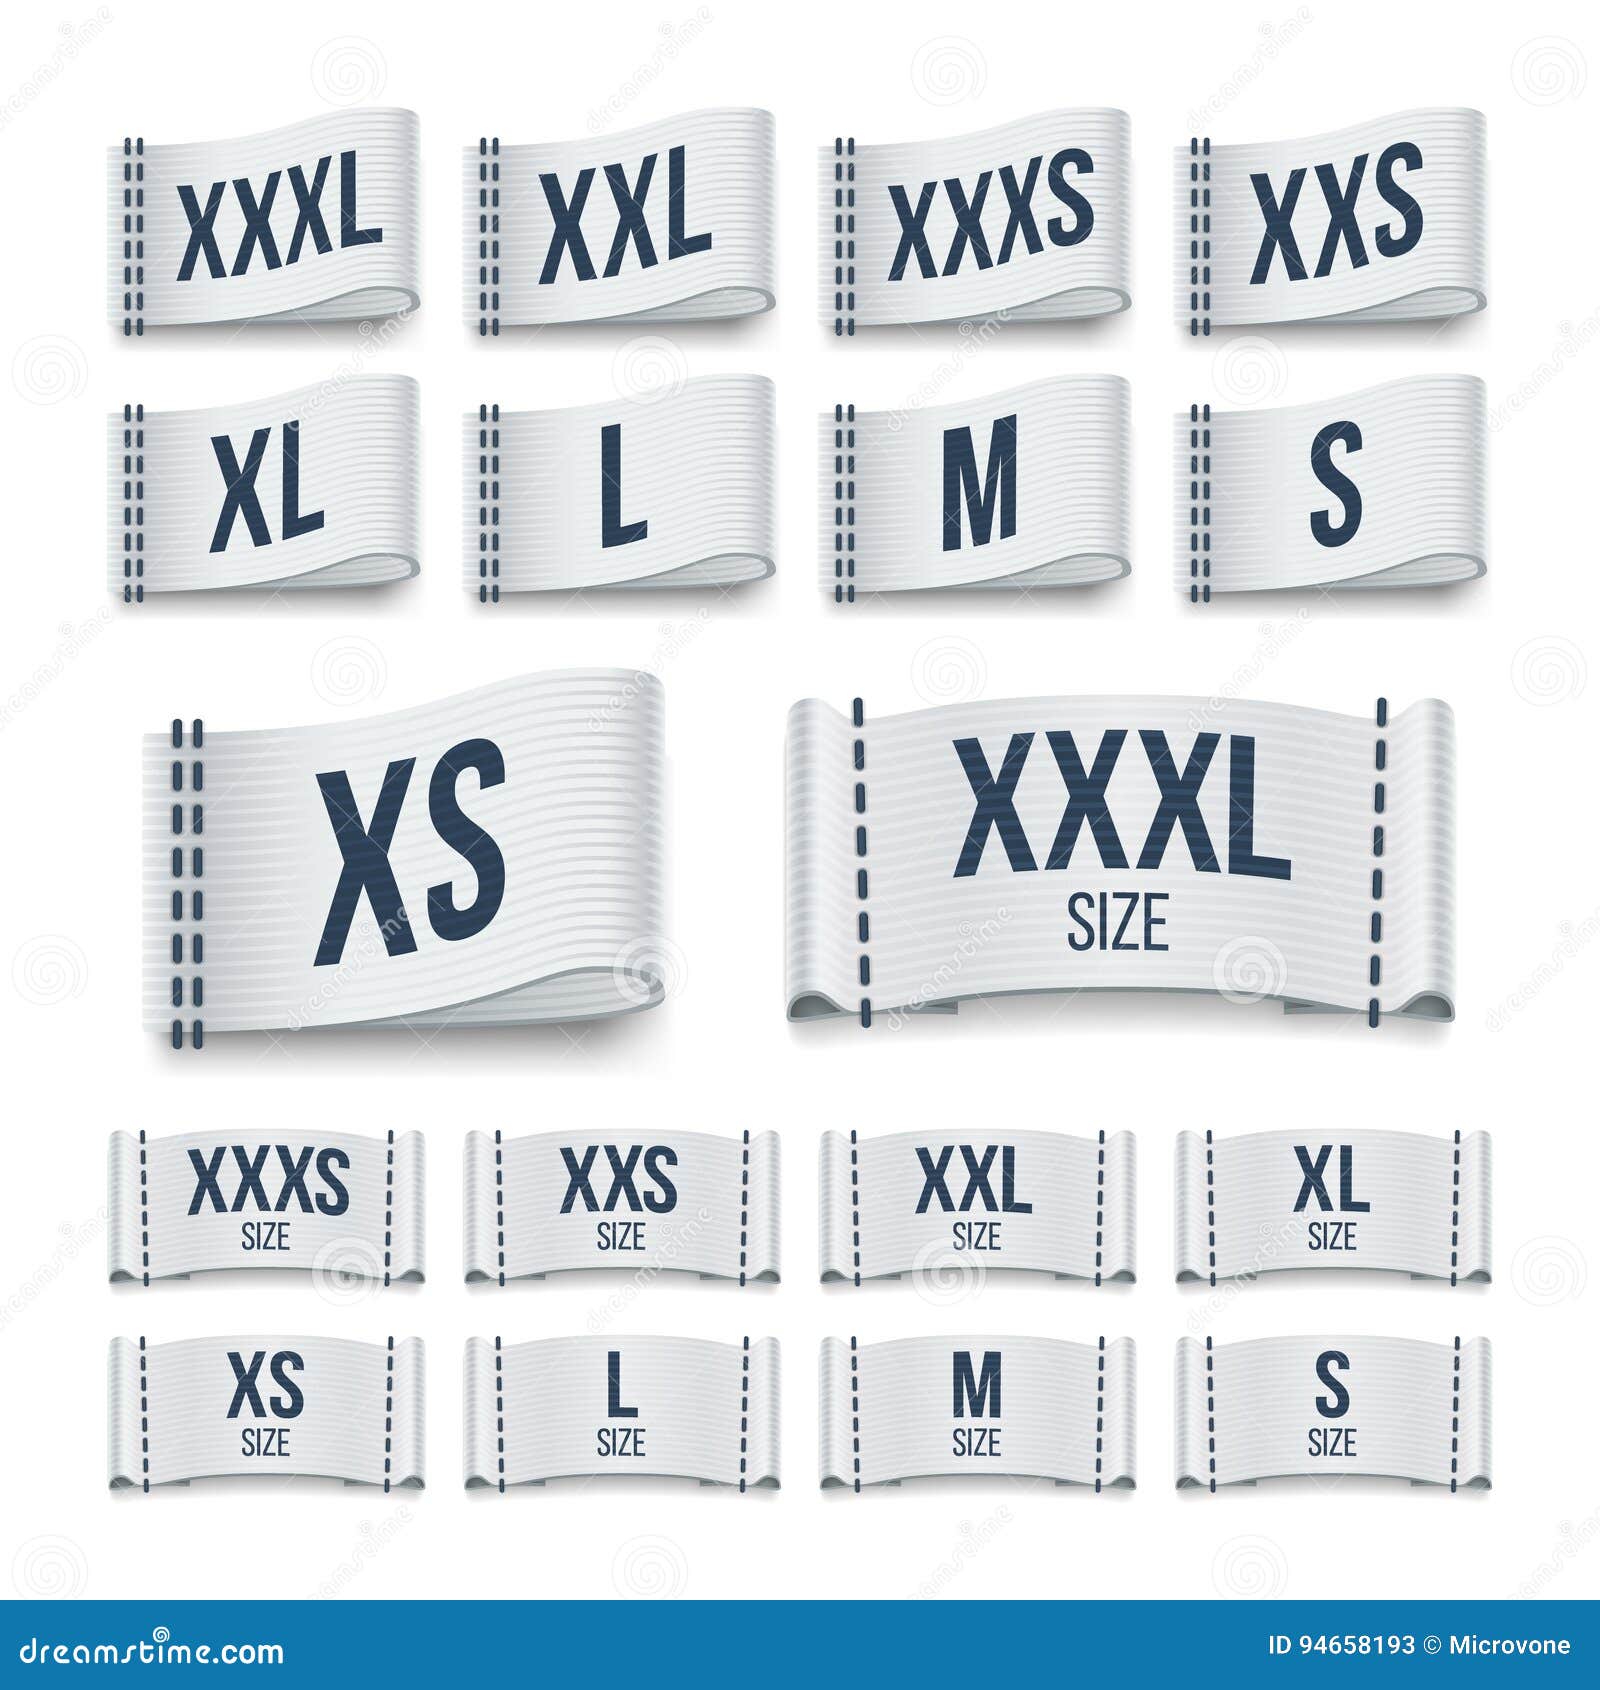 Xxs Size Stock Illustrations – 52 Xxs Size Stock Illustrations, Vectors &  Clipart - Dreamstime